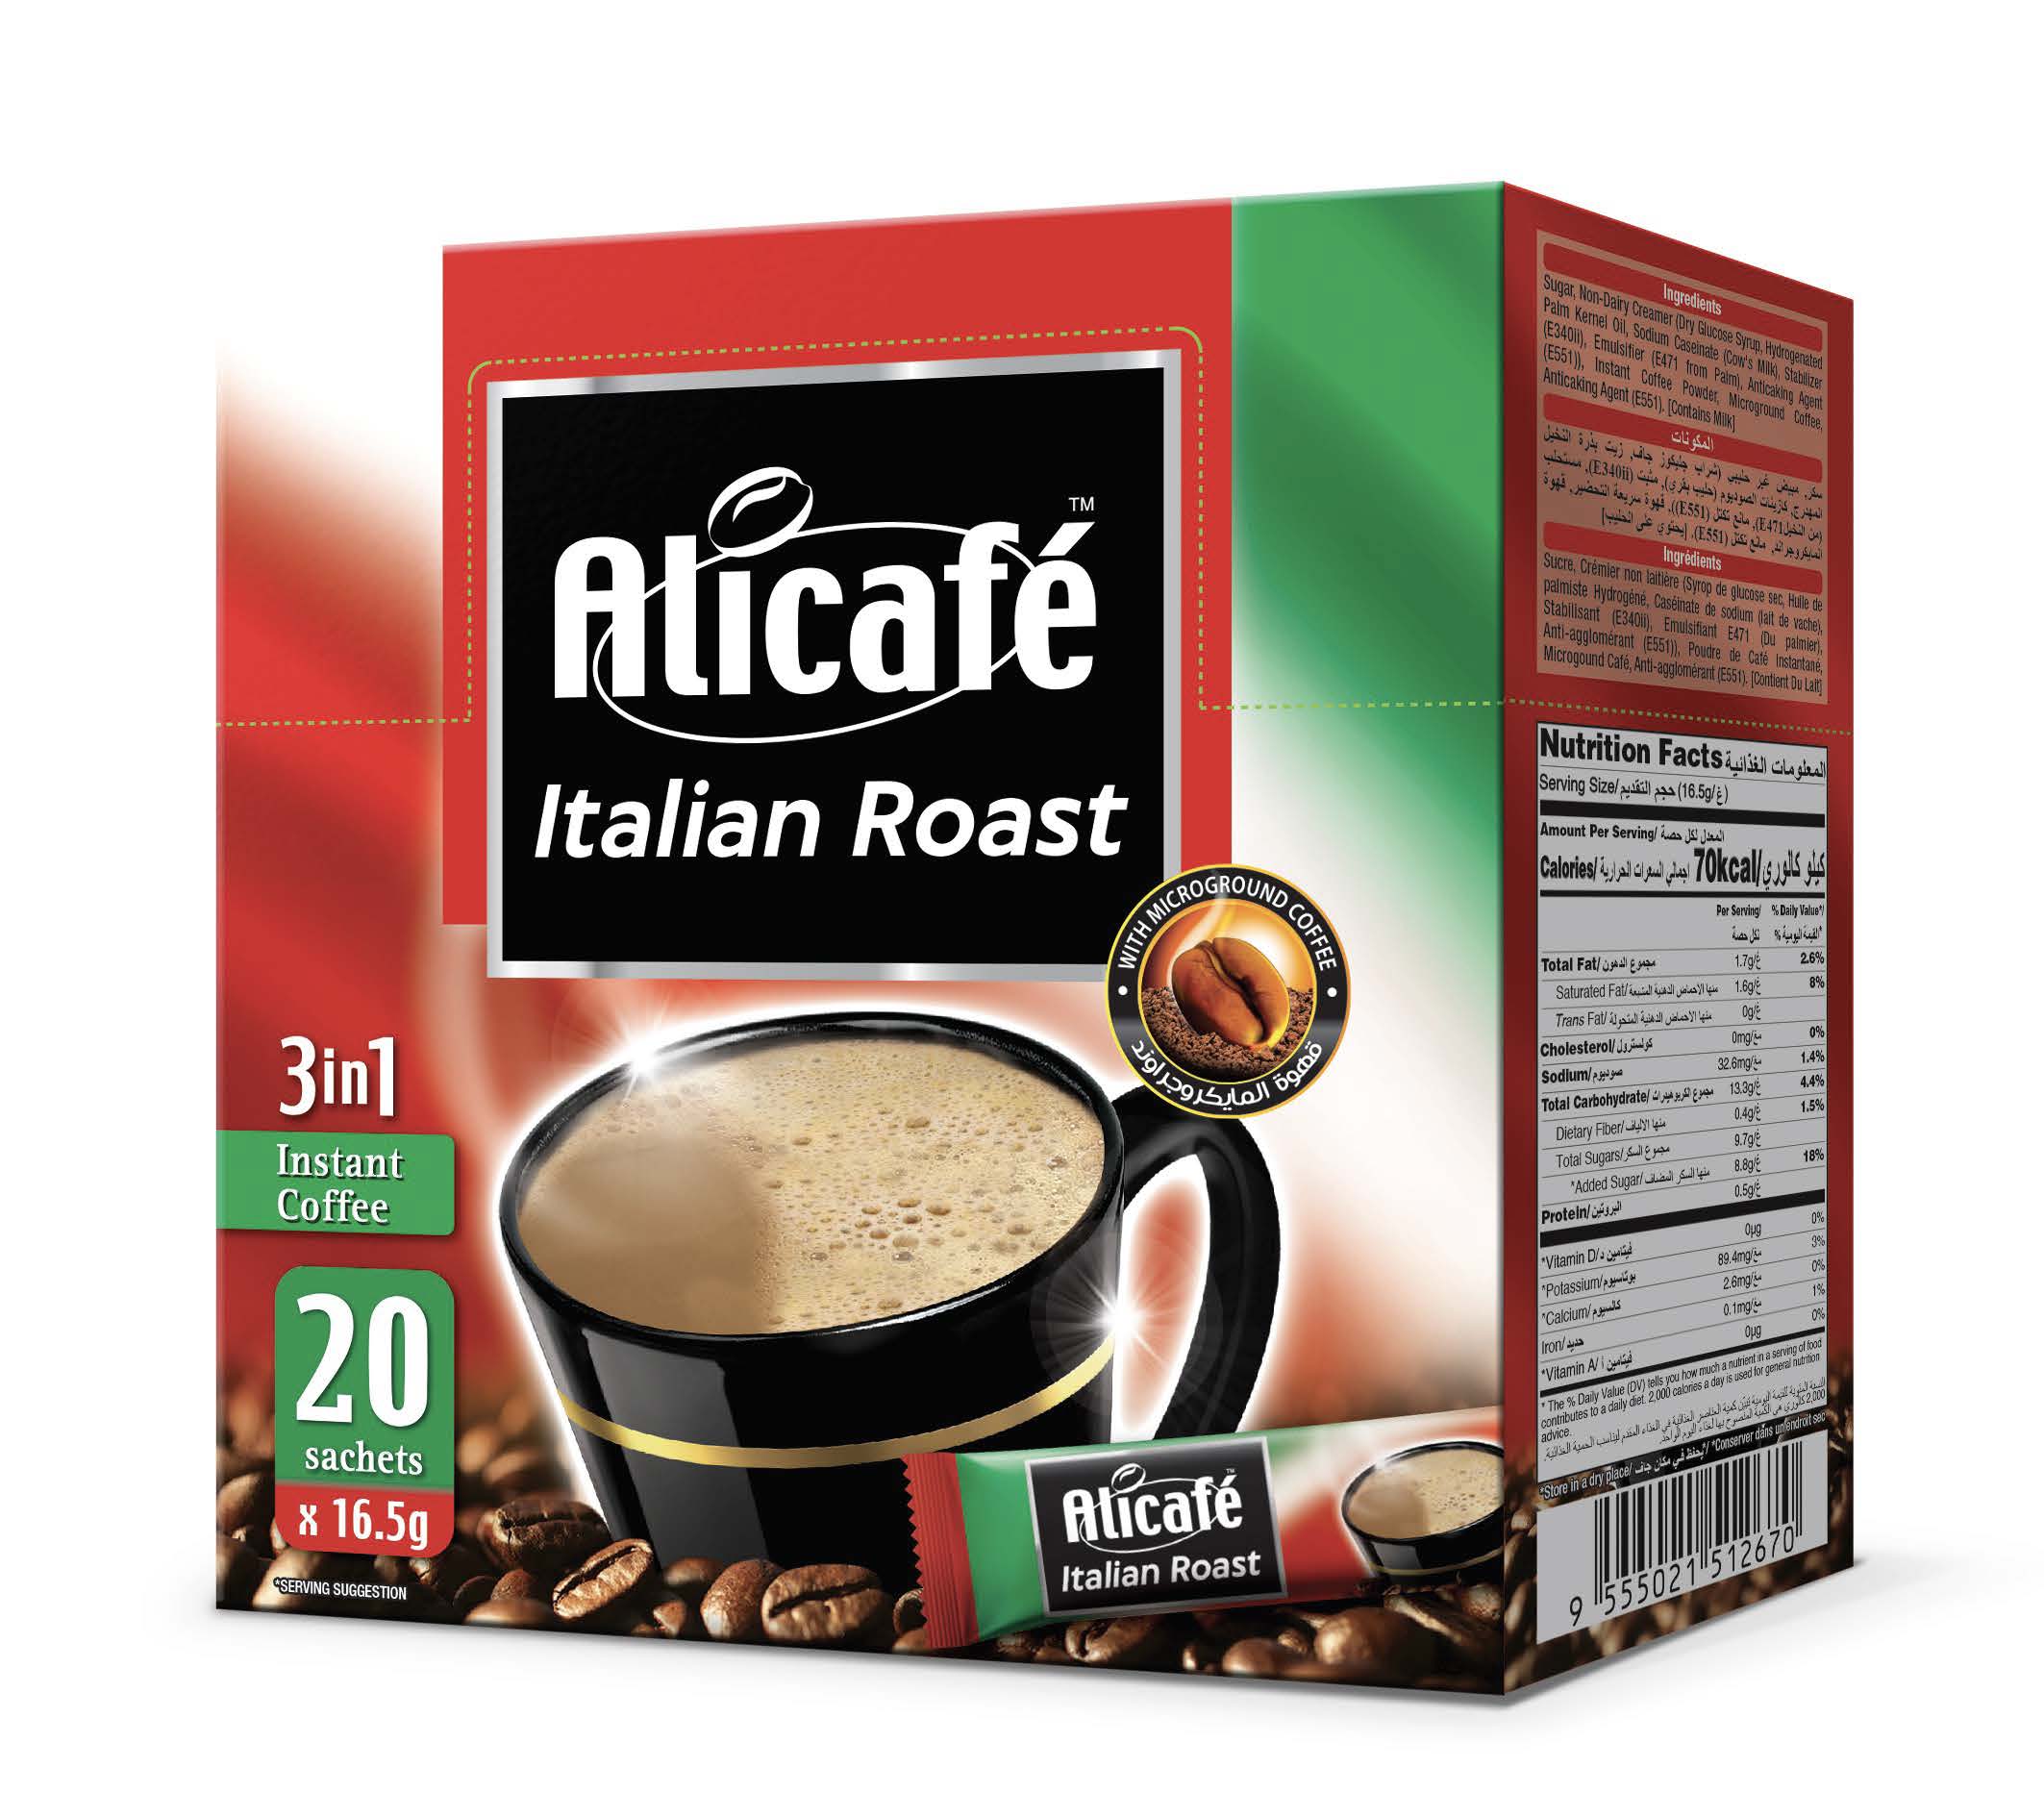 Alicafé Italian Roast Pouch 16.5g (20 Sticks)